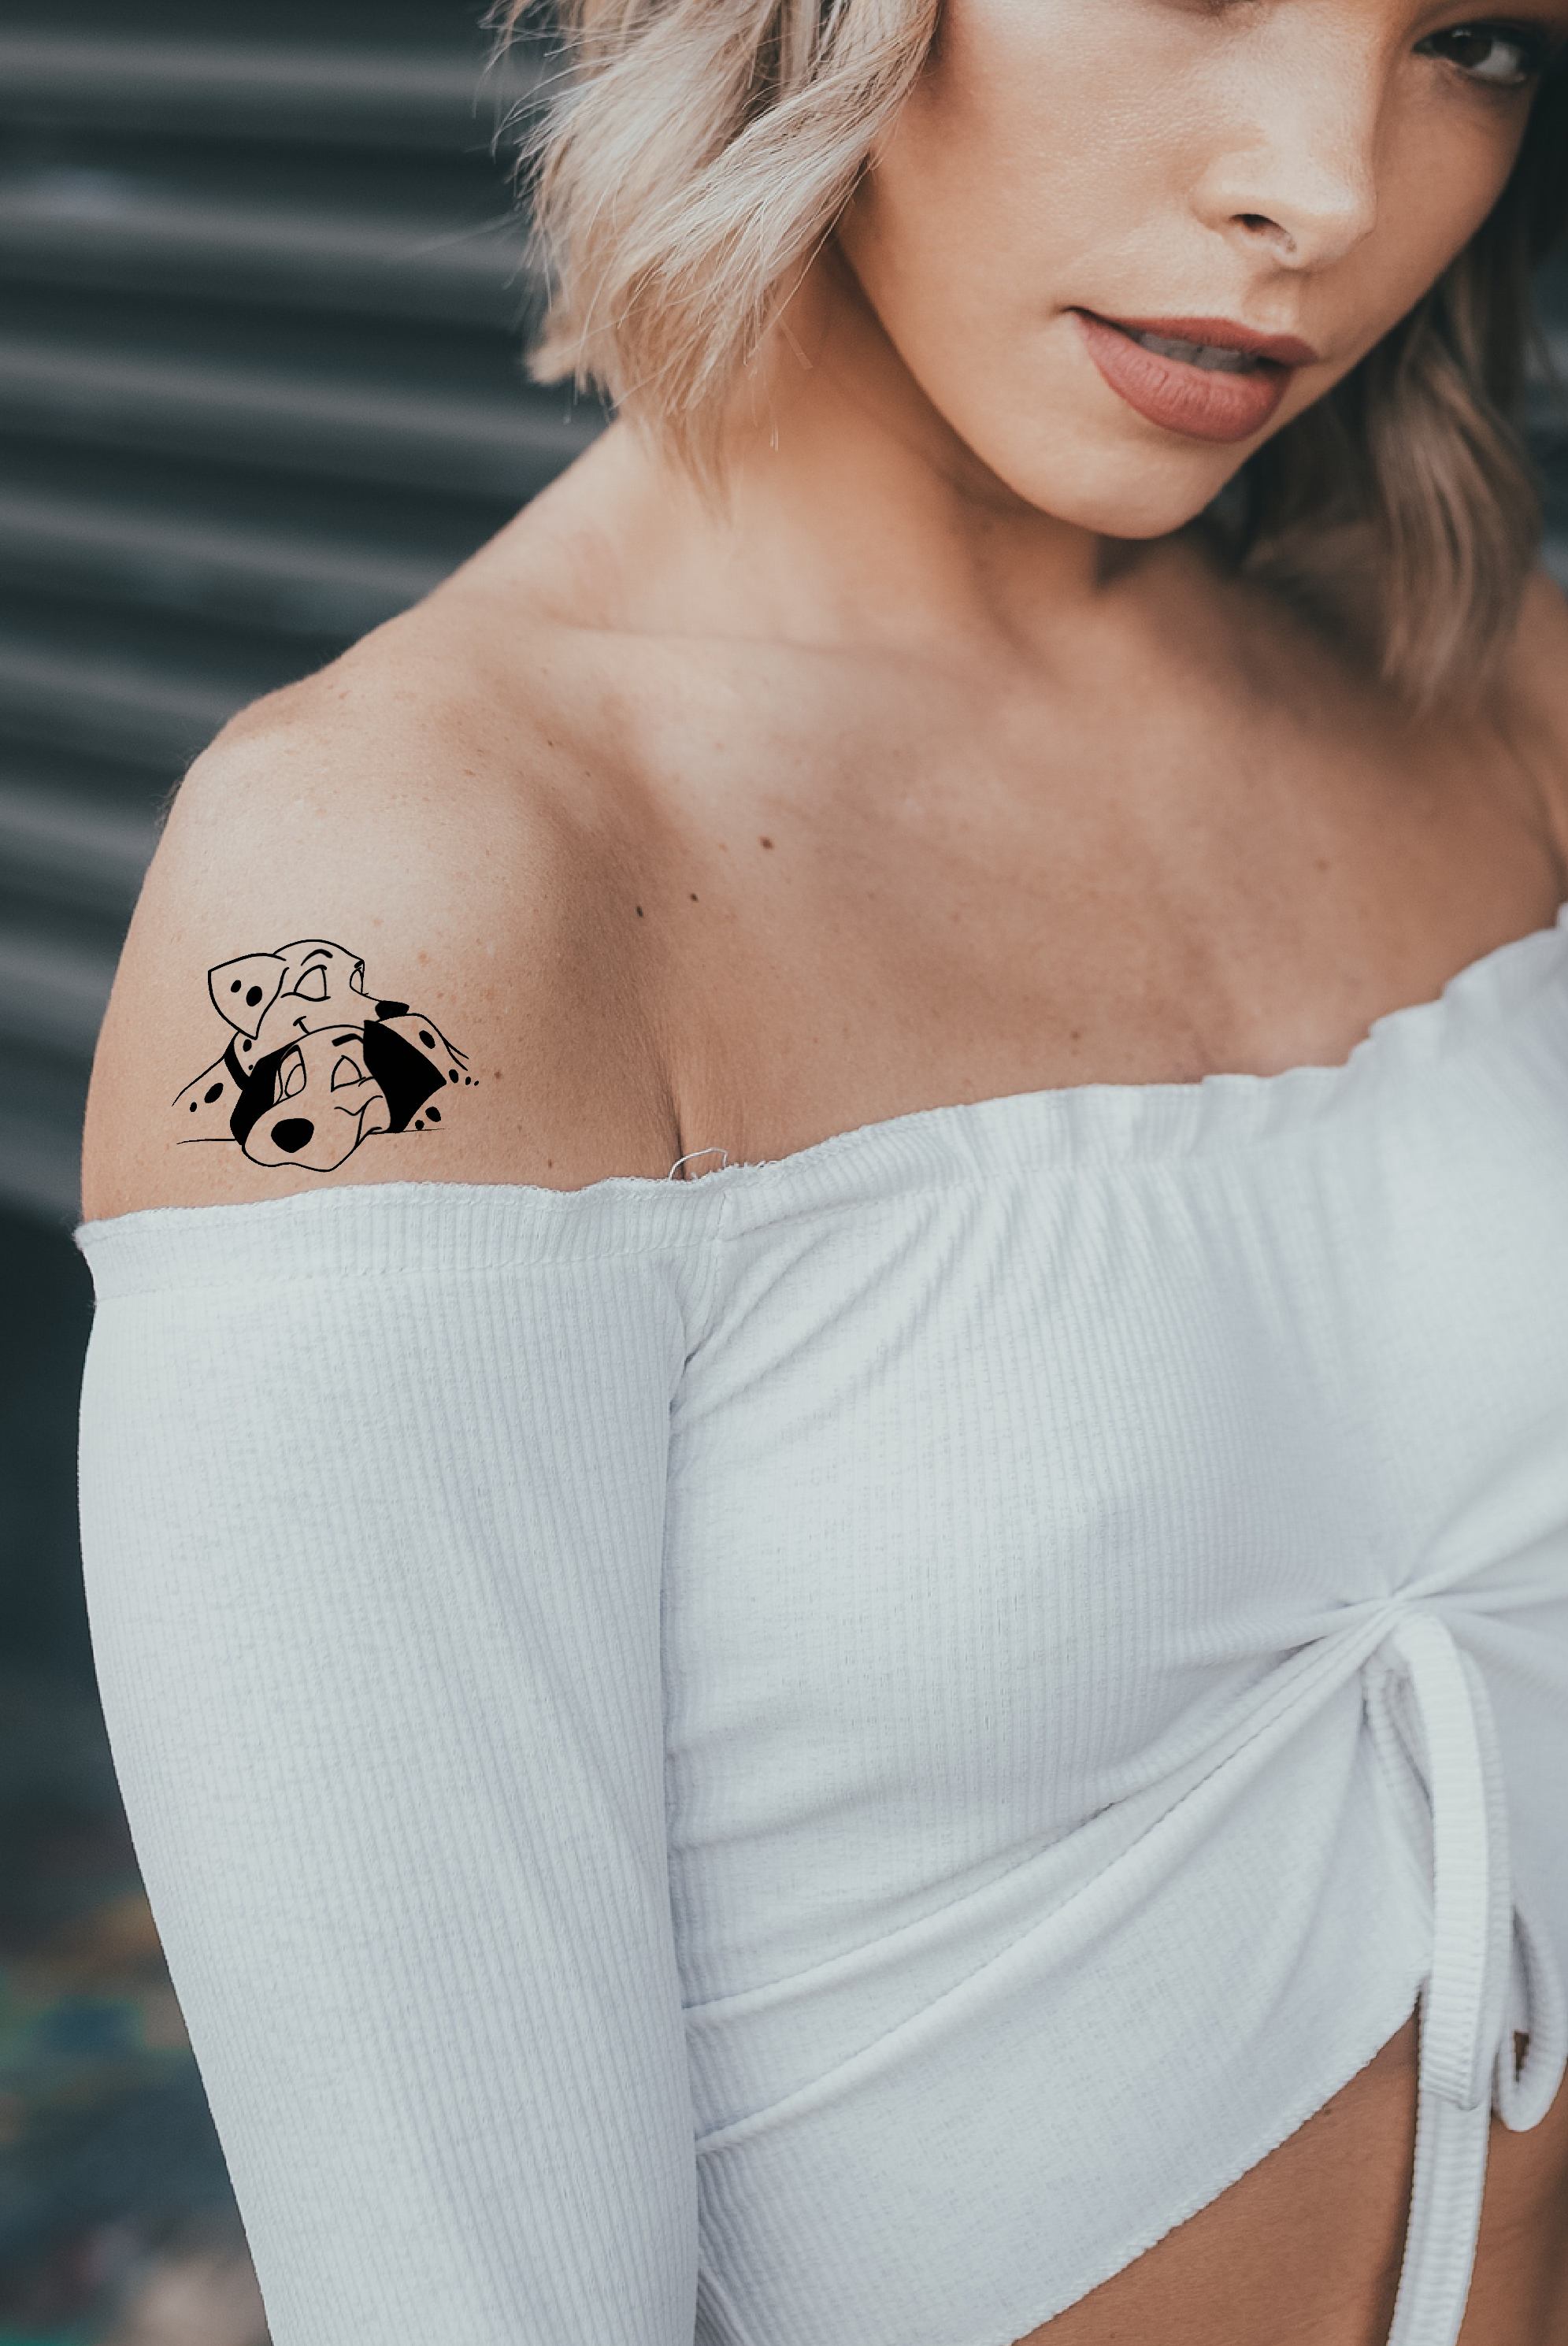 Top 10 Family Tattoo Ideas, Designs & Symbols